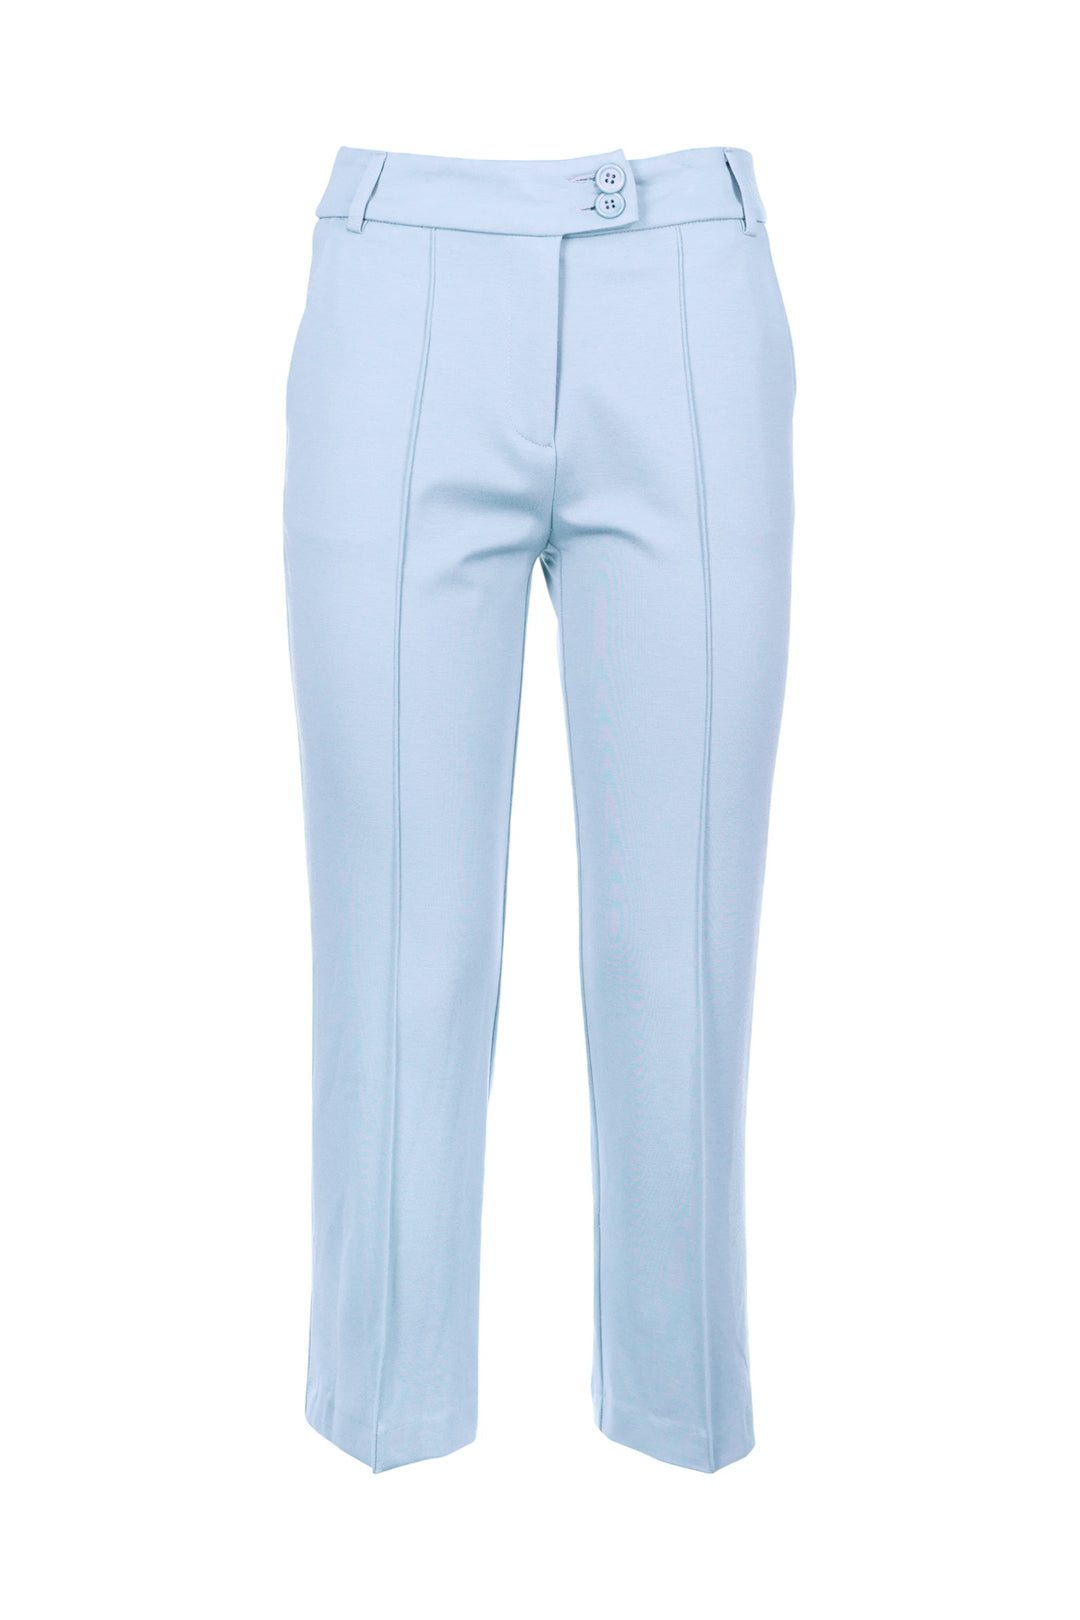 FRACOMINA Pantalone cropped blu chiaro in tessuto stretch - Mancinelli 1954